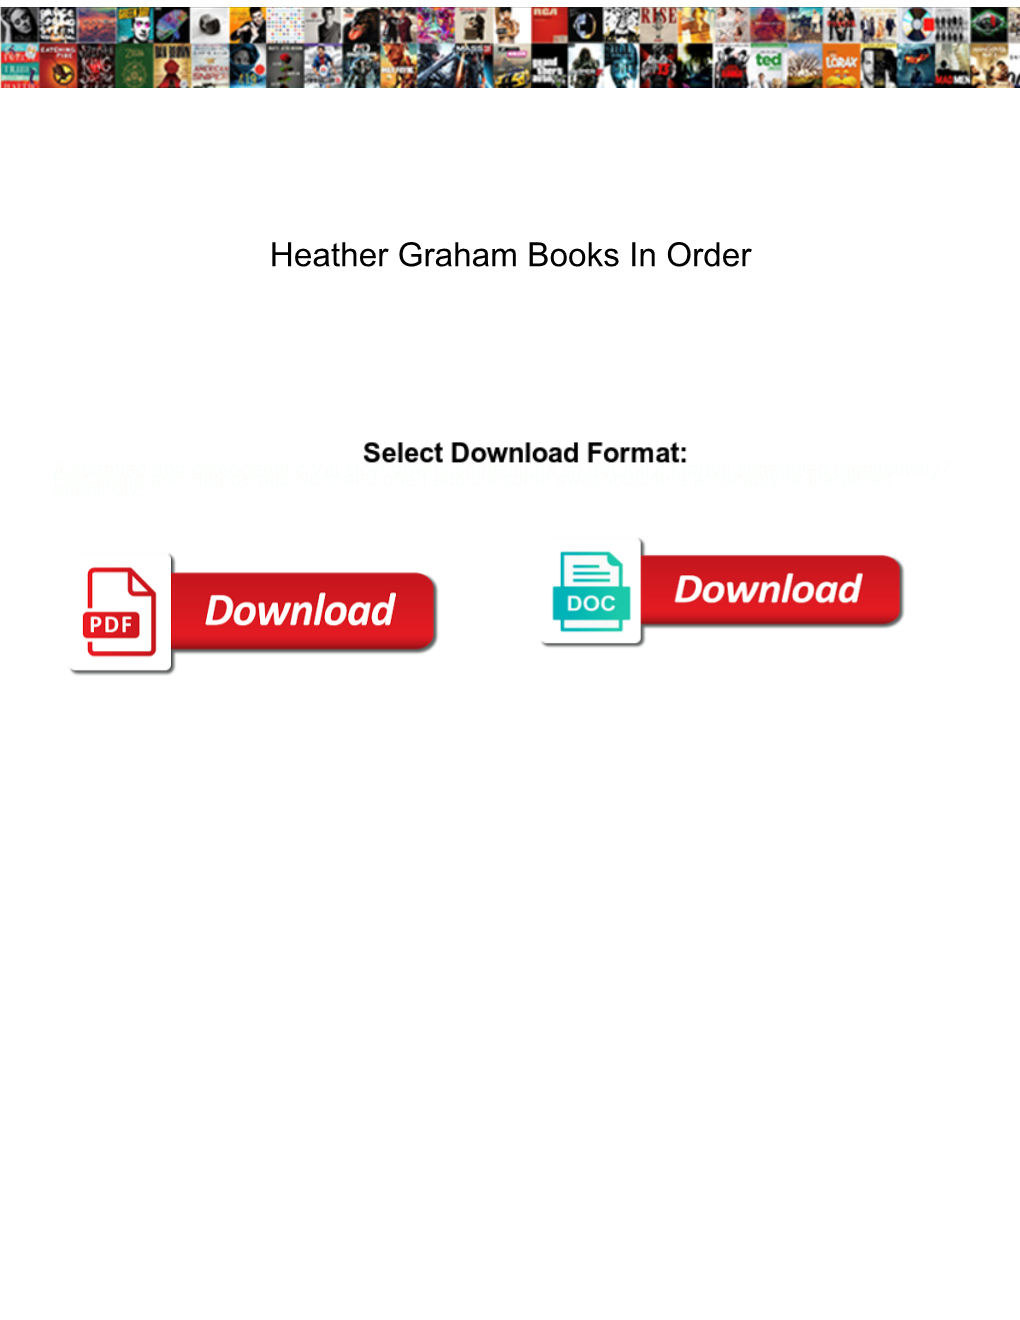 Heather Graham Books in Order